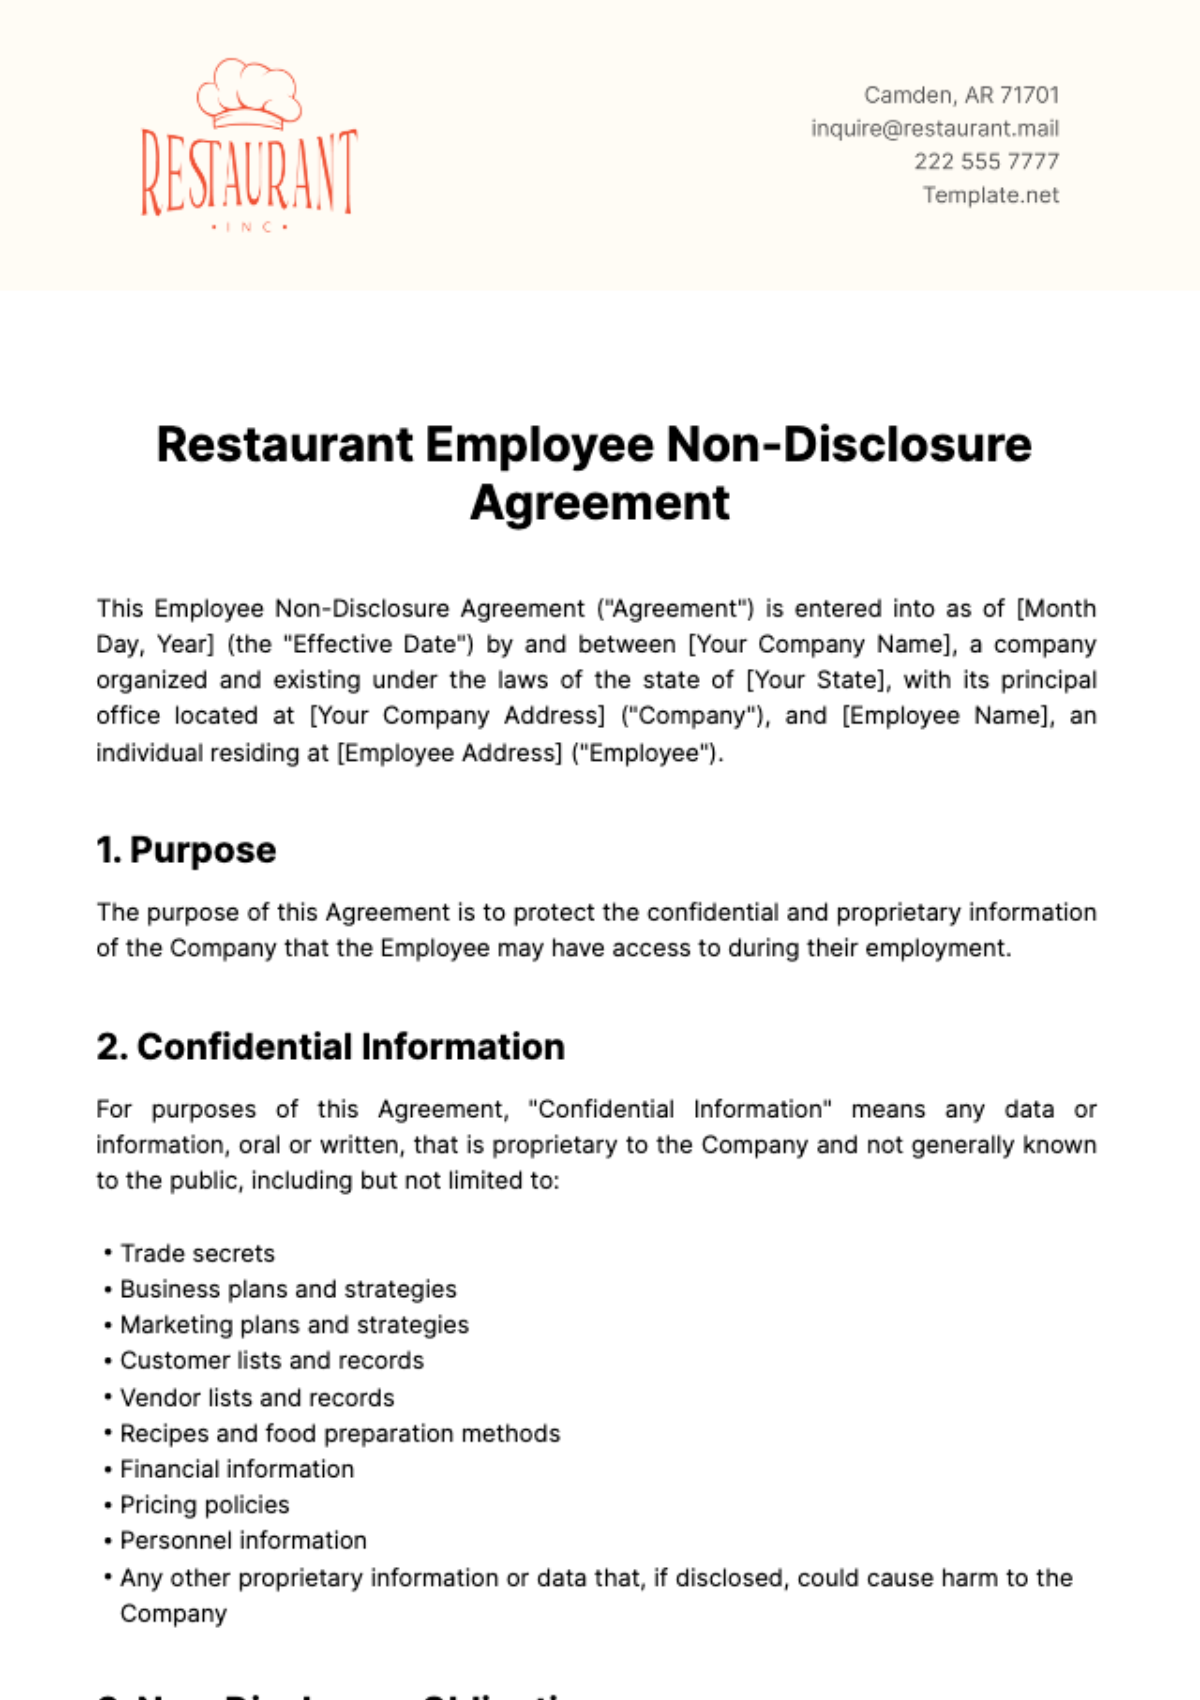 Restaurant Employee Non-Disclosure Agreement Template